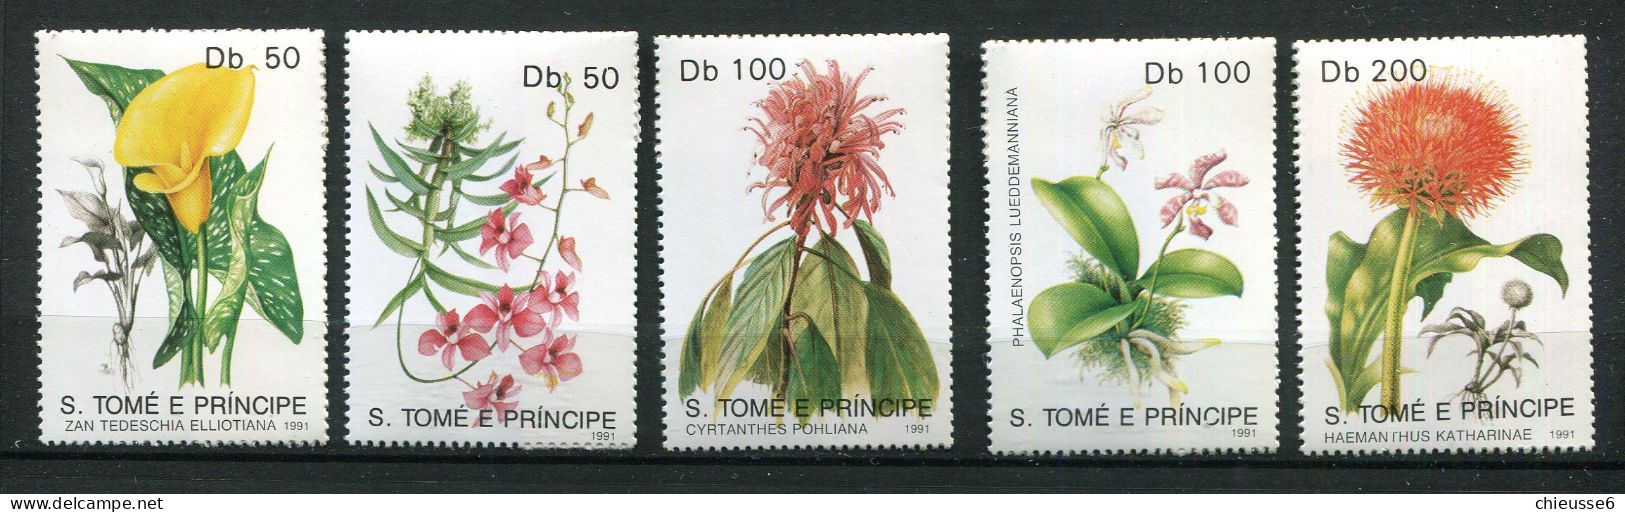 S. Tome  ** N° 1052 à 1056 - Fleurs - Sao Tome And Principe